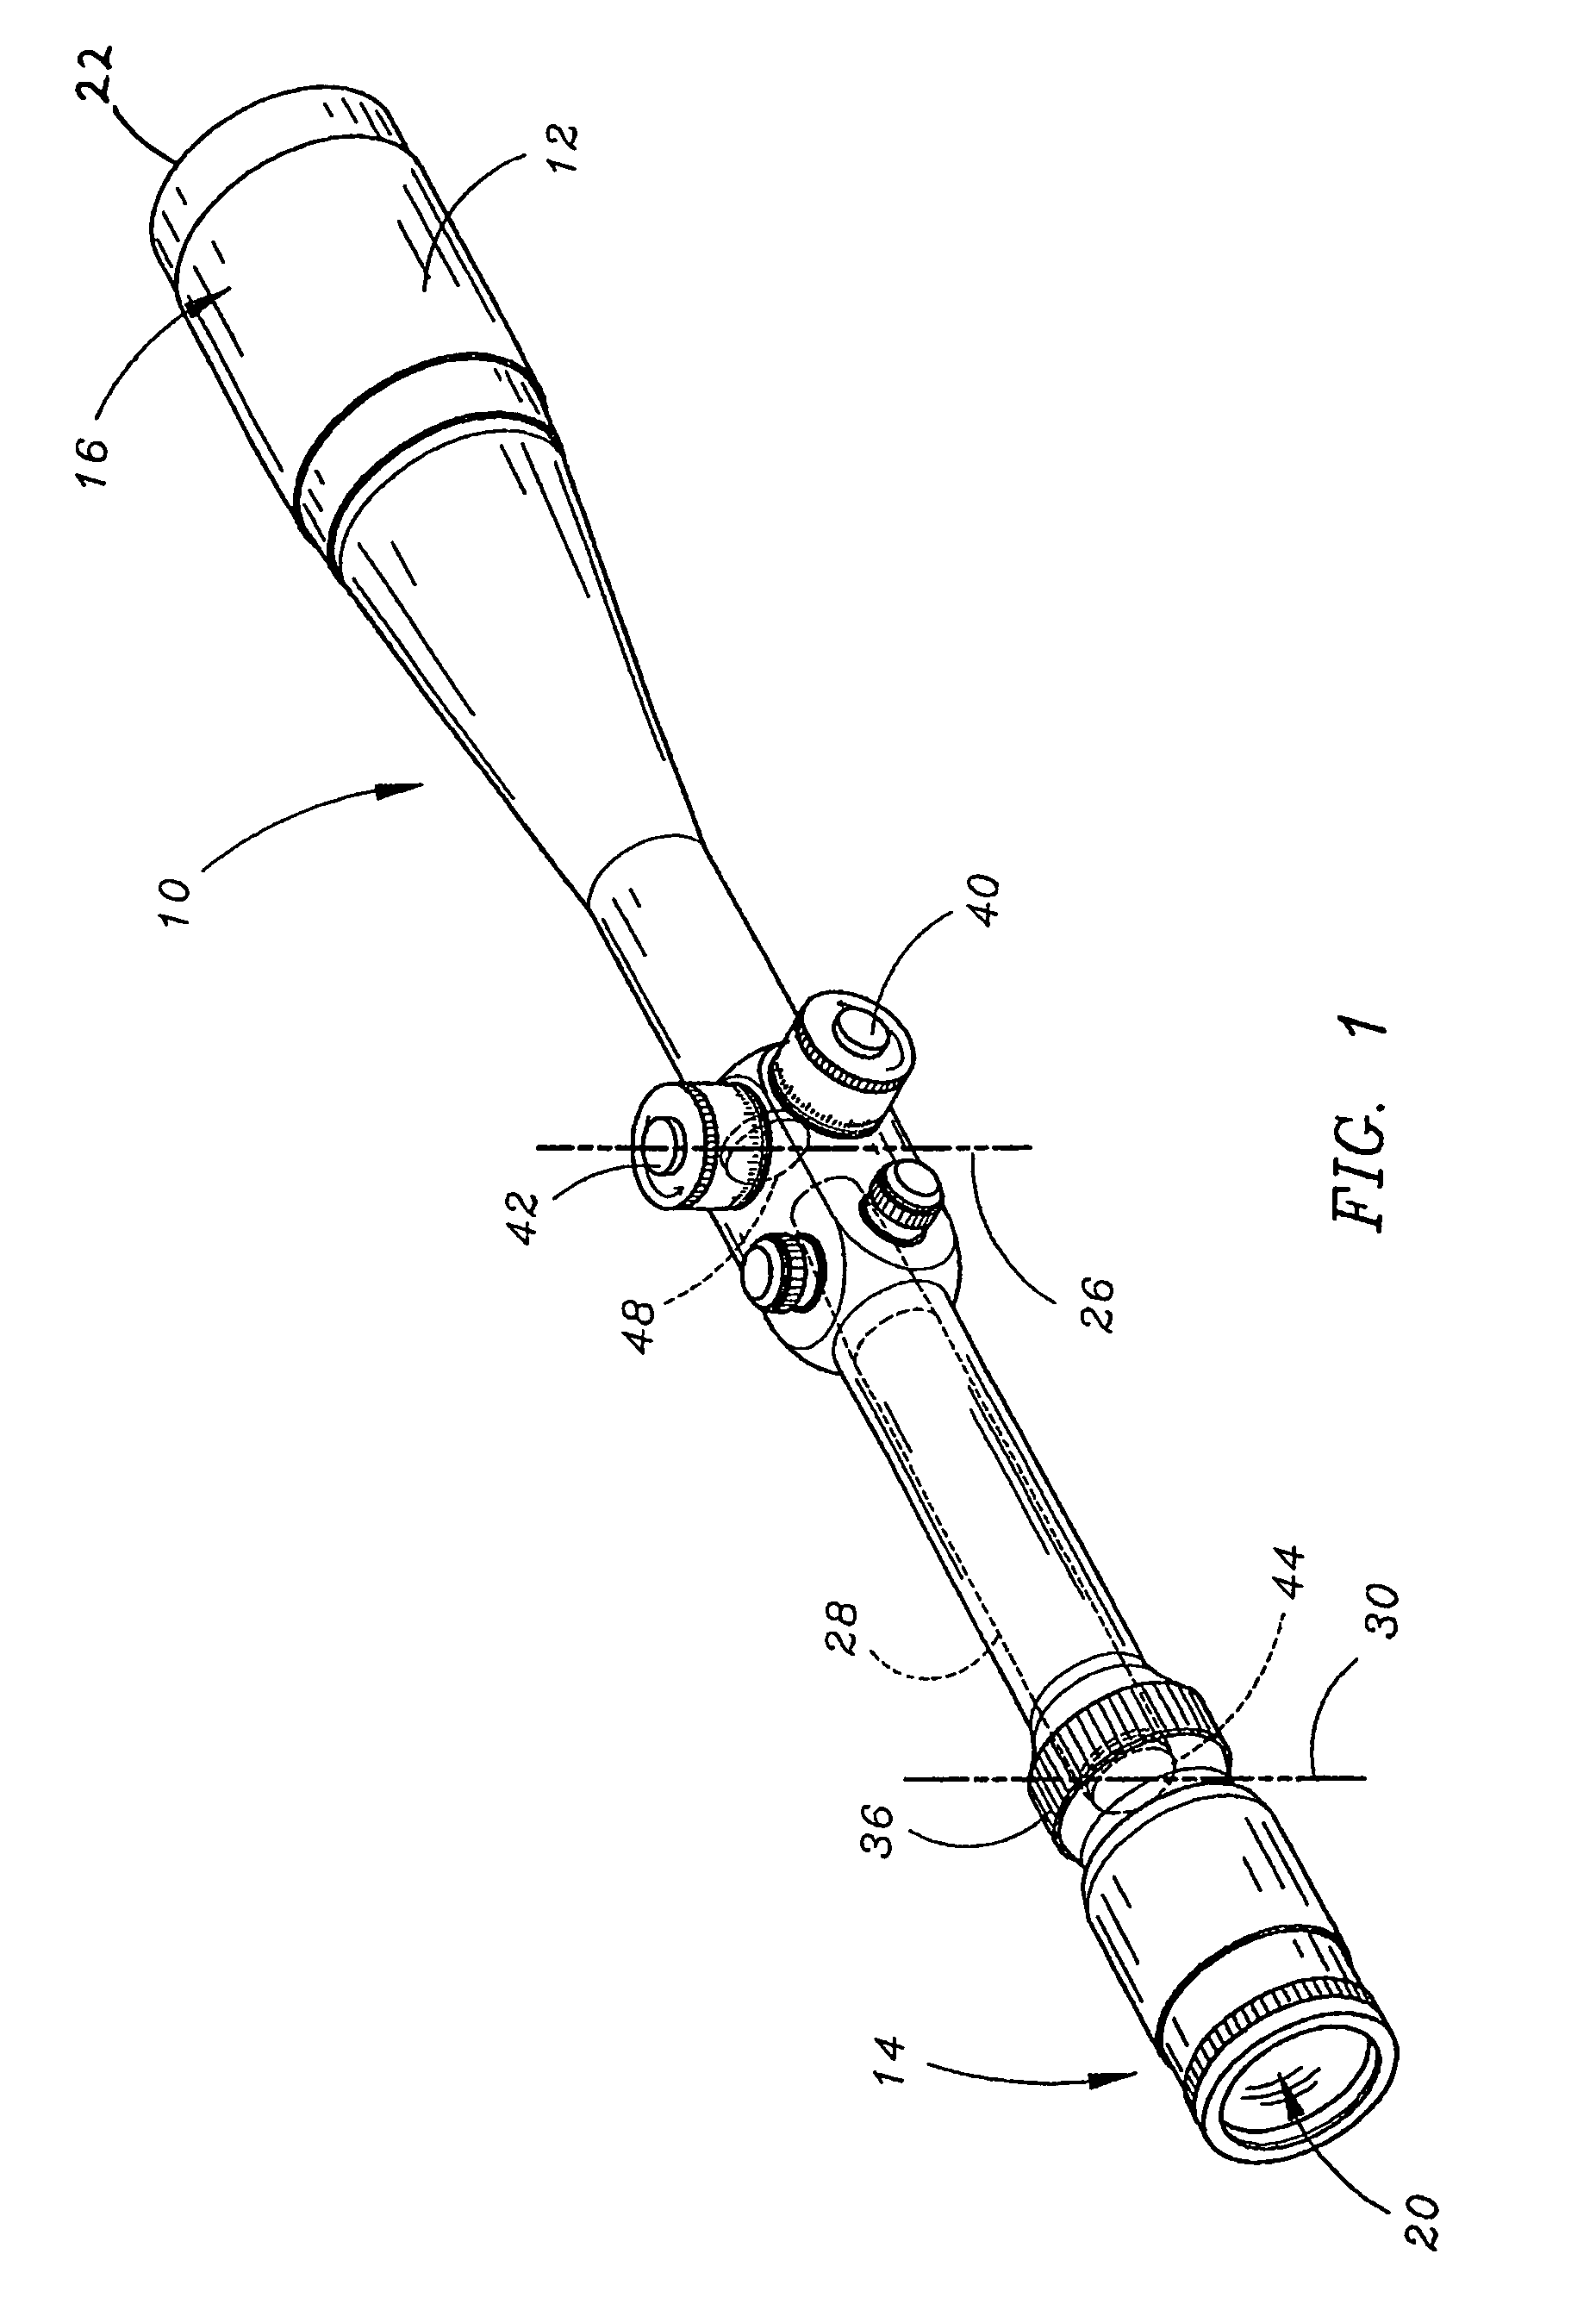 Telescopic gun sight windage correction system